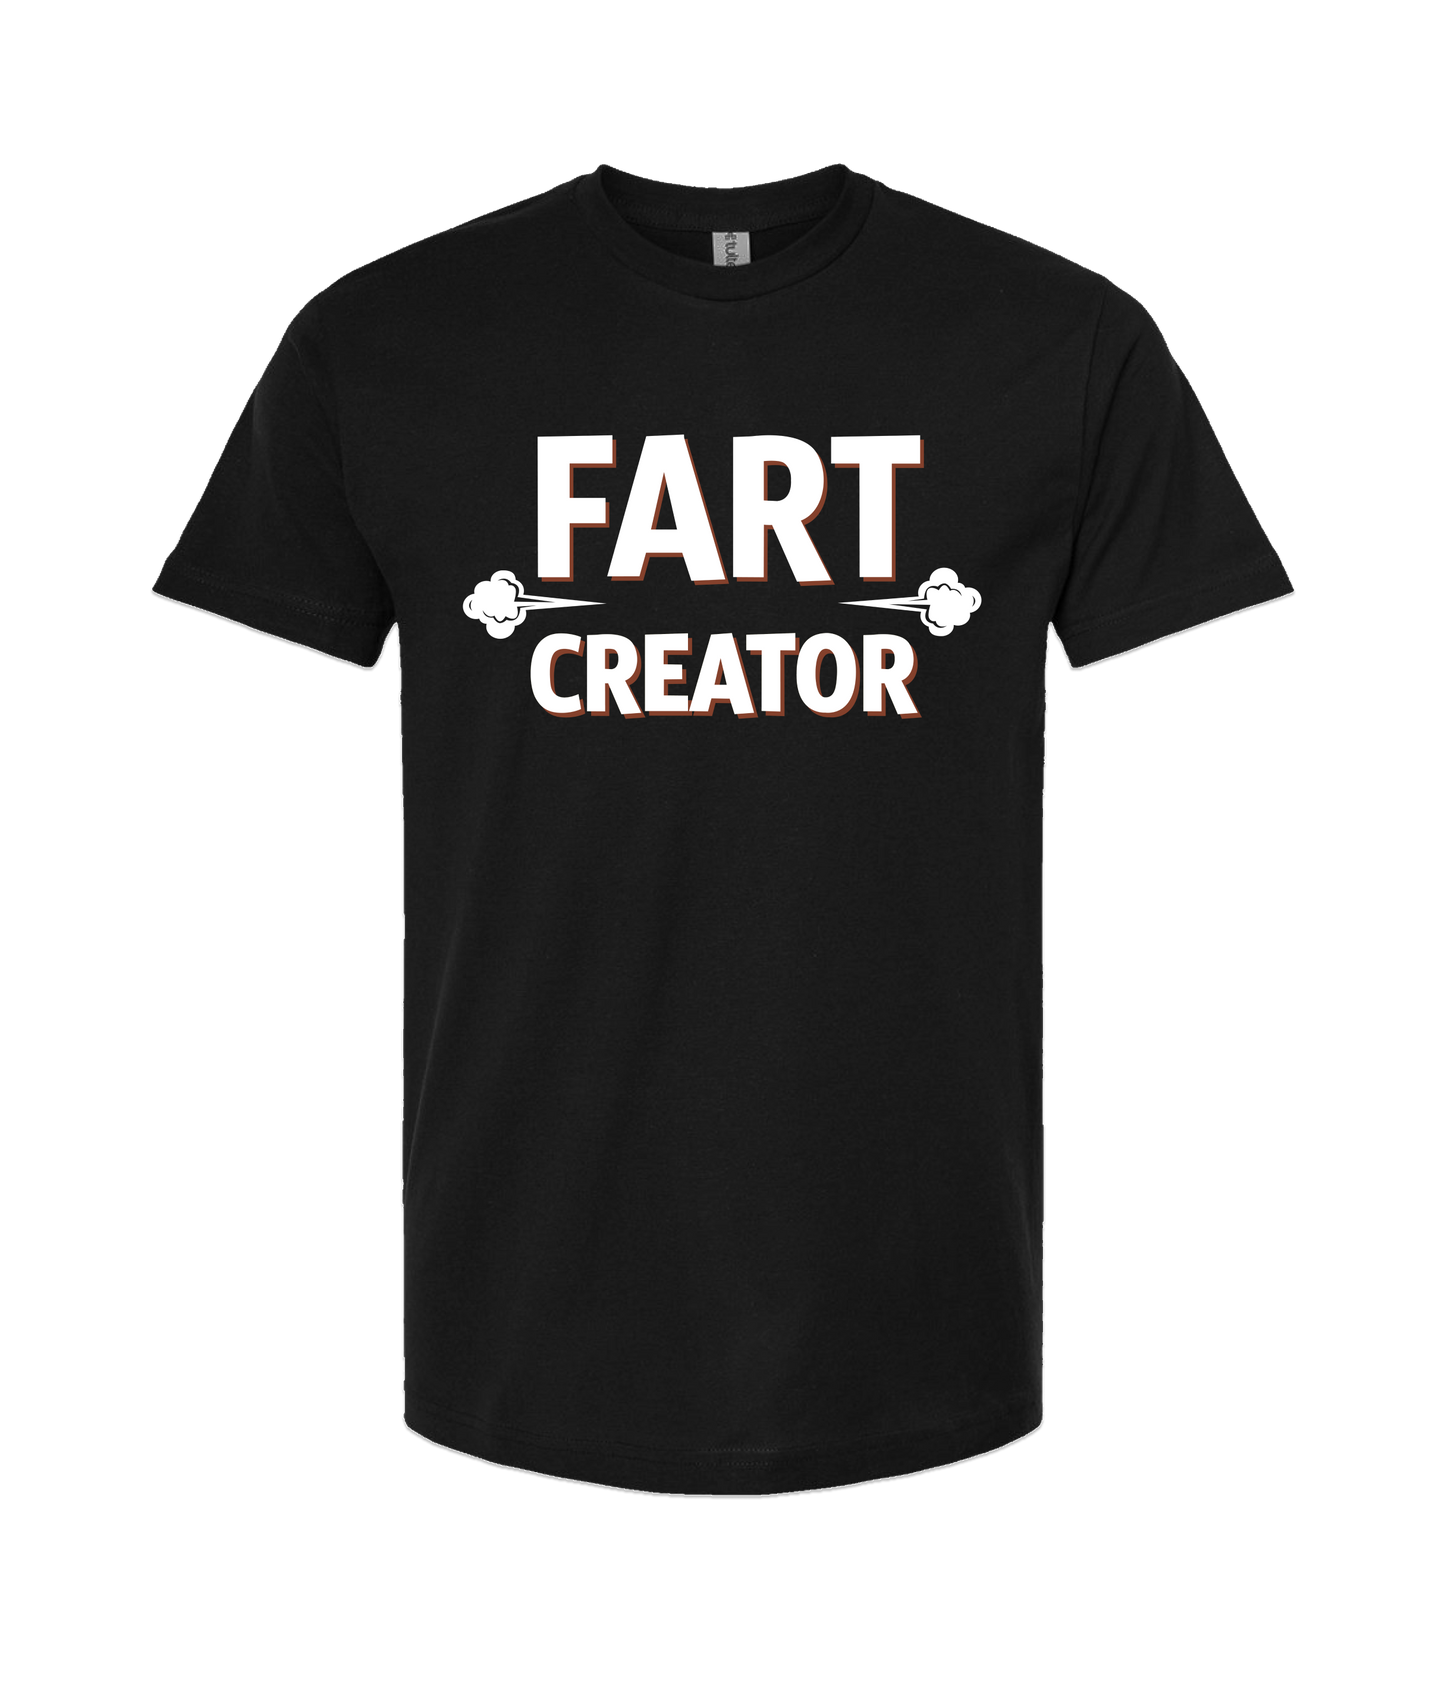 iFart - CREATOR - Black T-Shirt